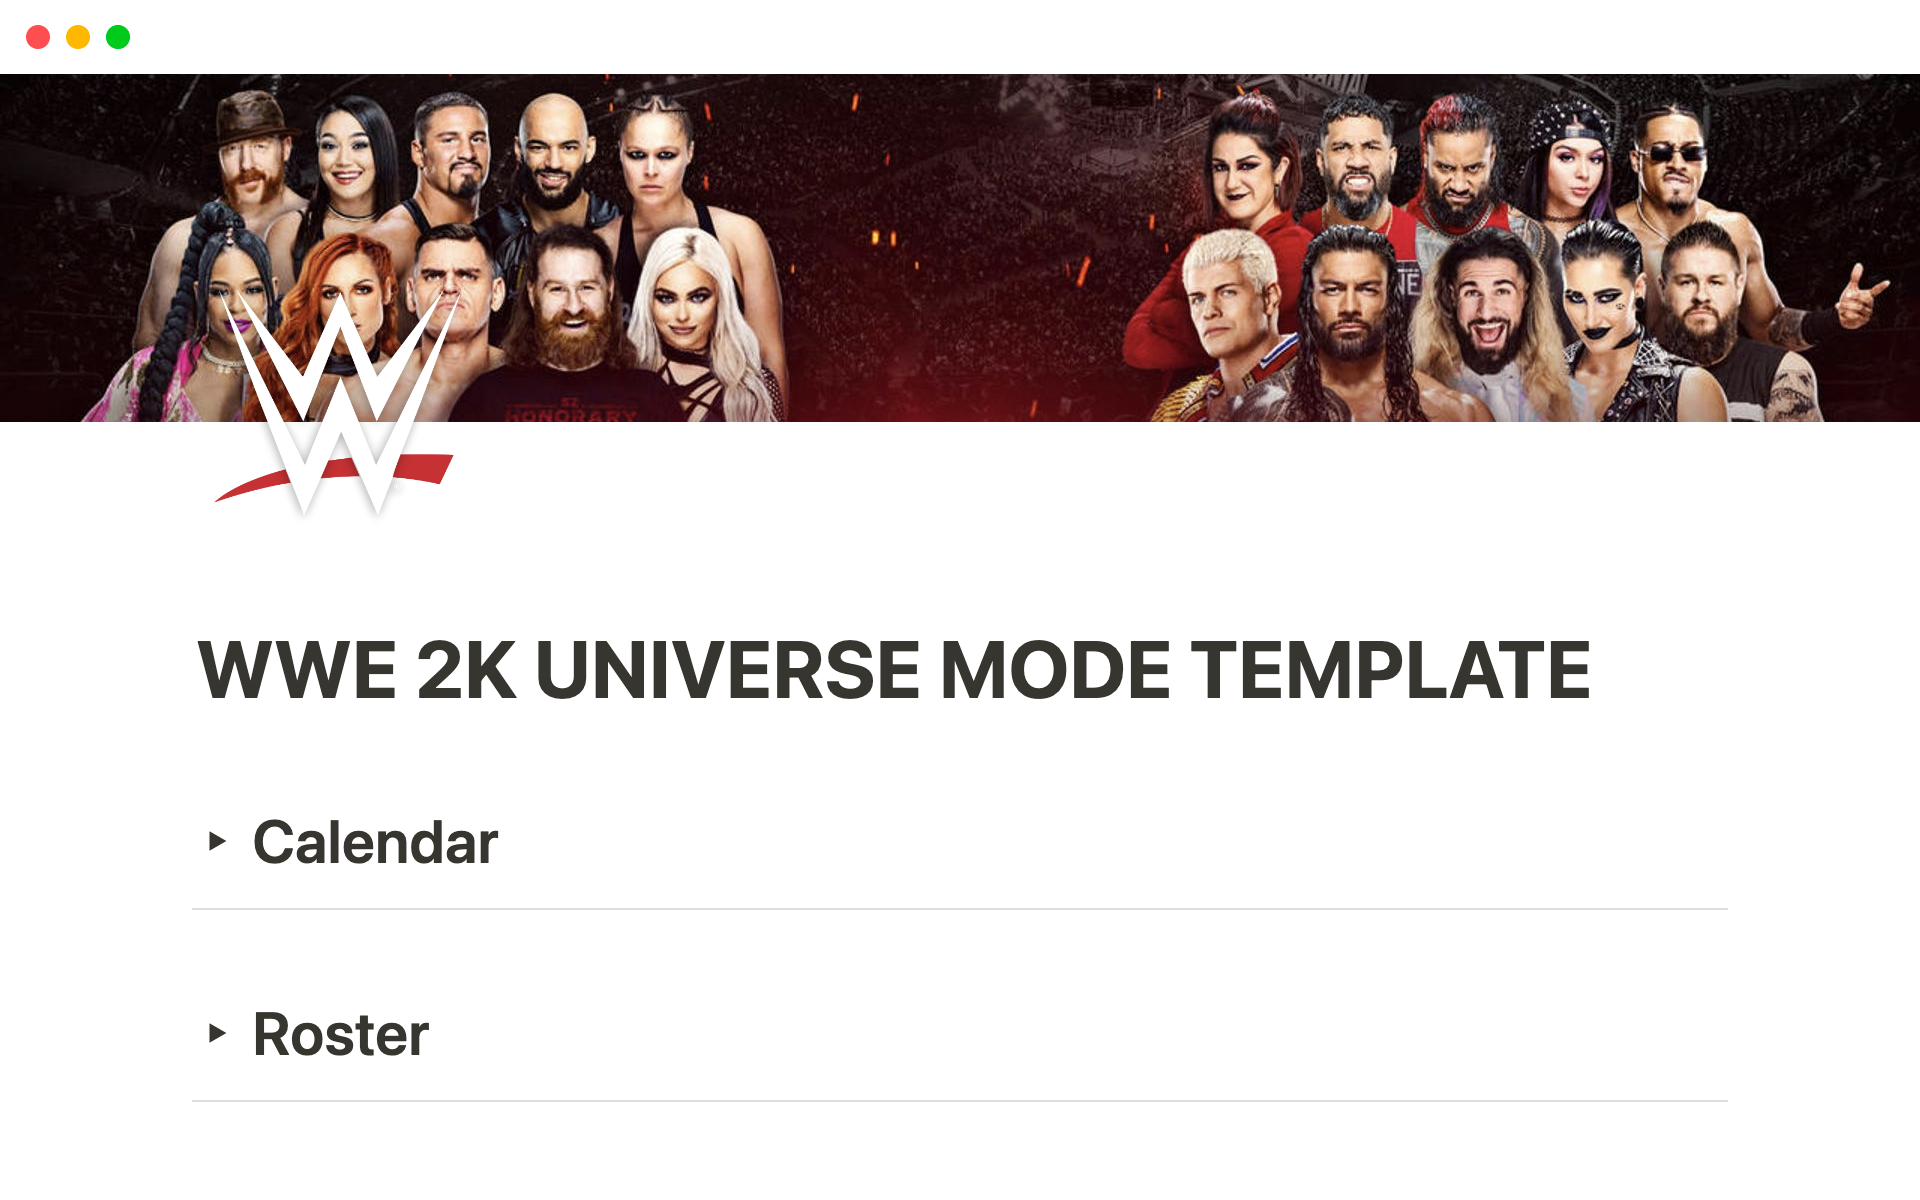 WWE 2K Universe Mode님의 템플릿 미리보기